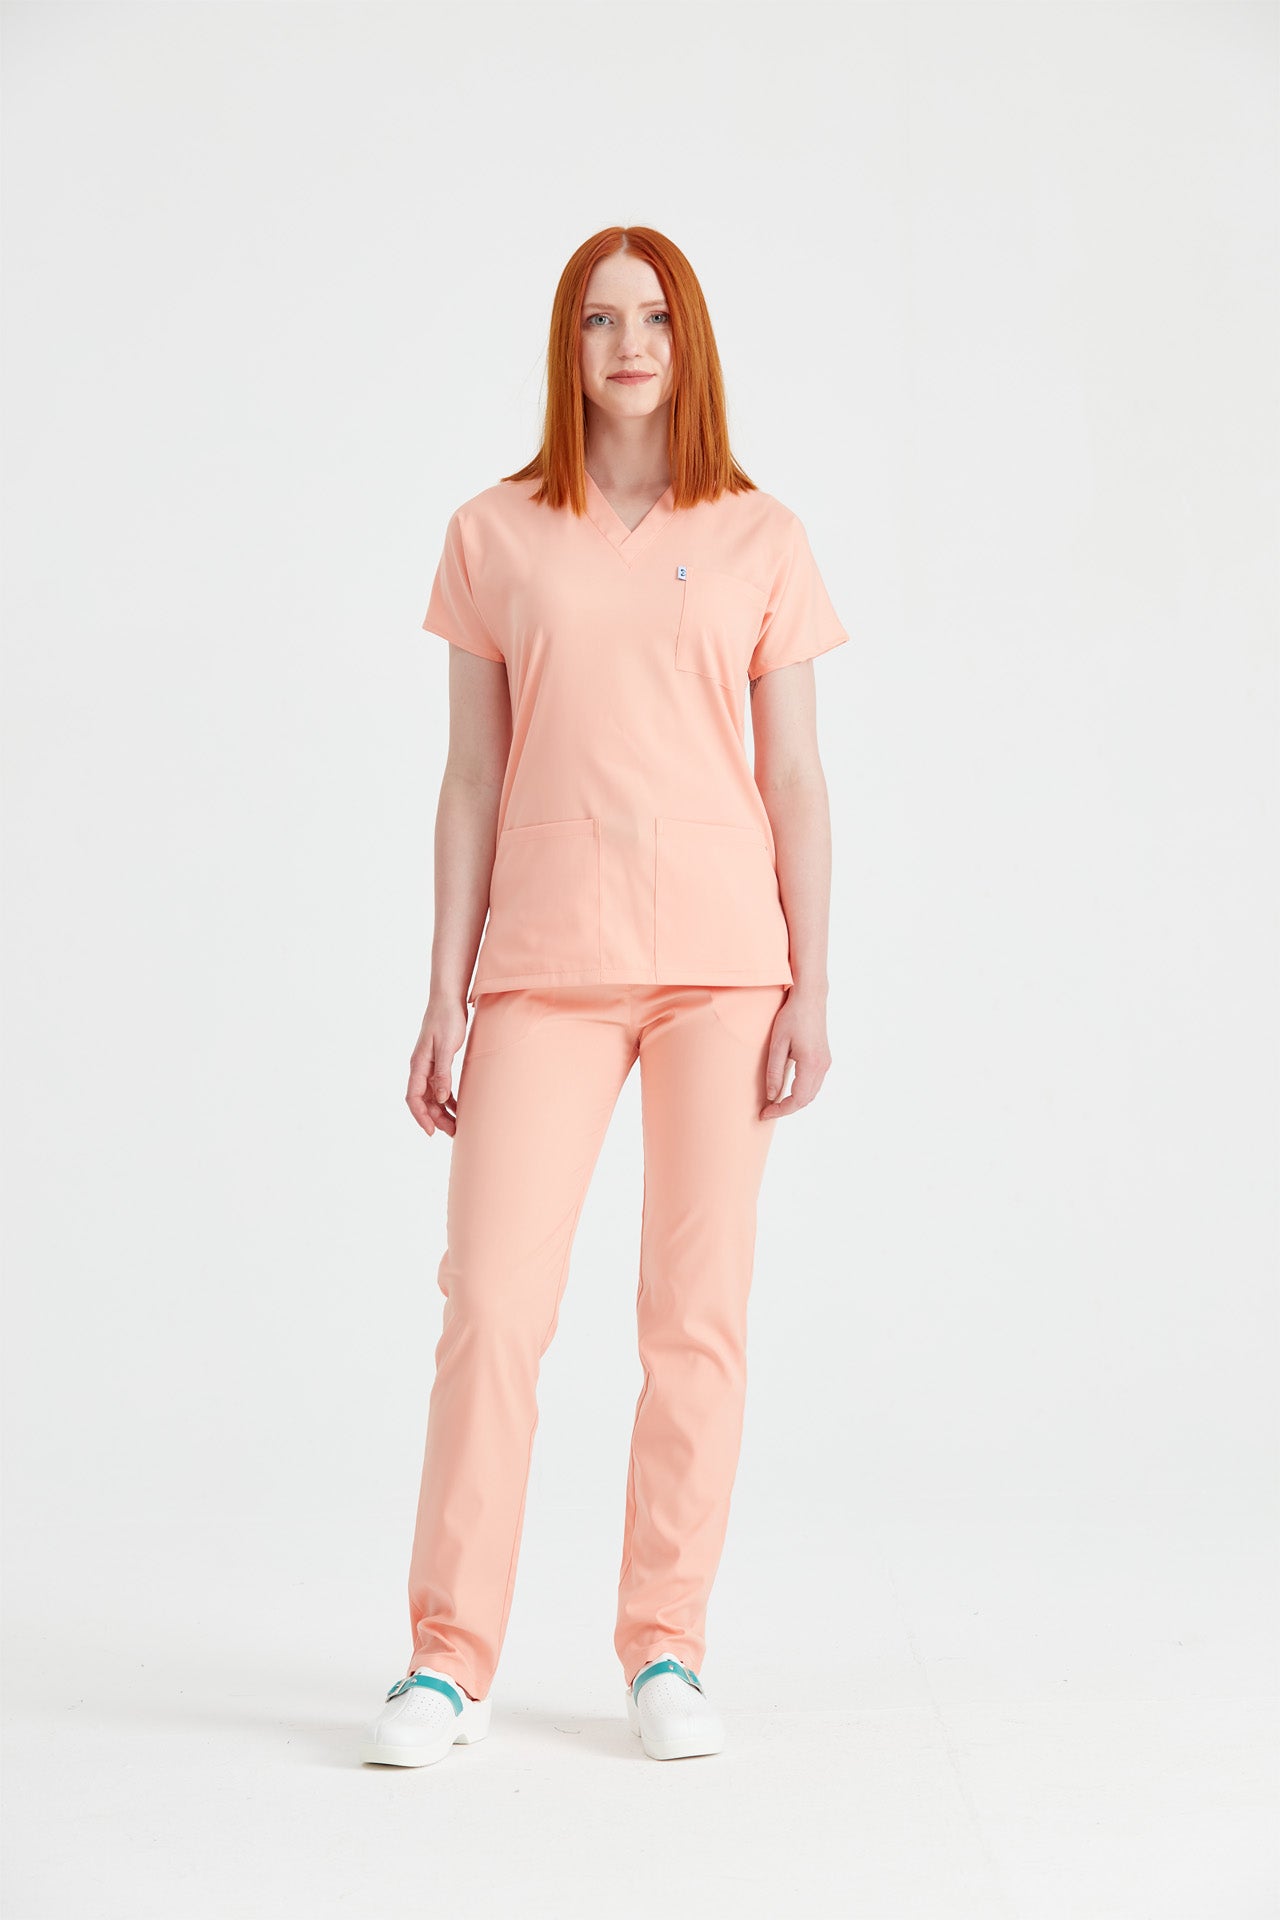 Asistenta medicala imbracata in costum din elastan Peach, roz piersica, vedere din picioare